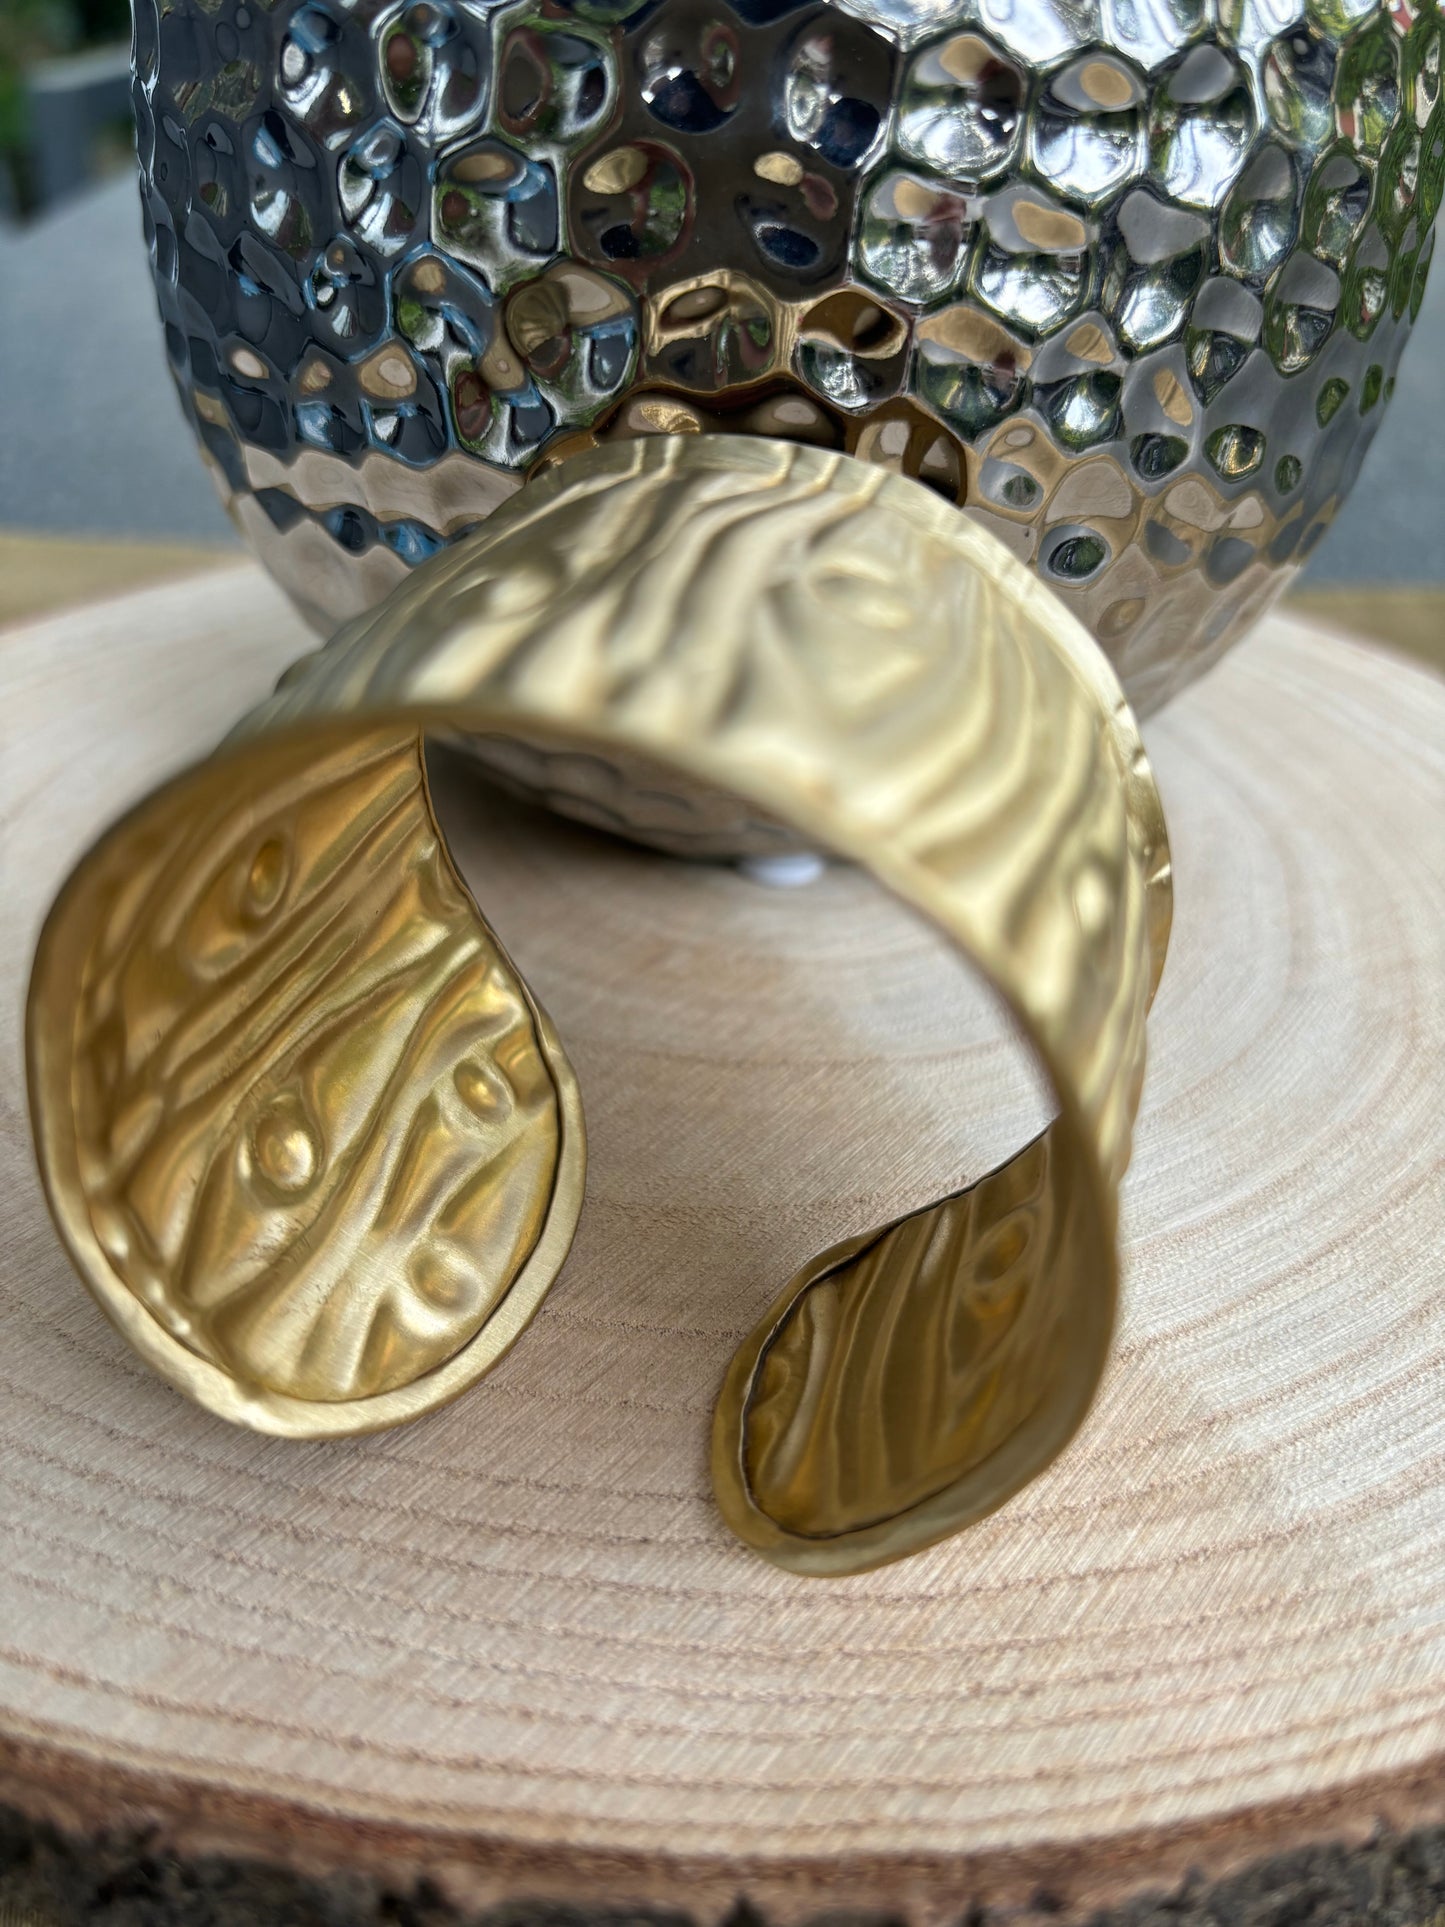 Brass bracelet with self design